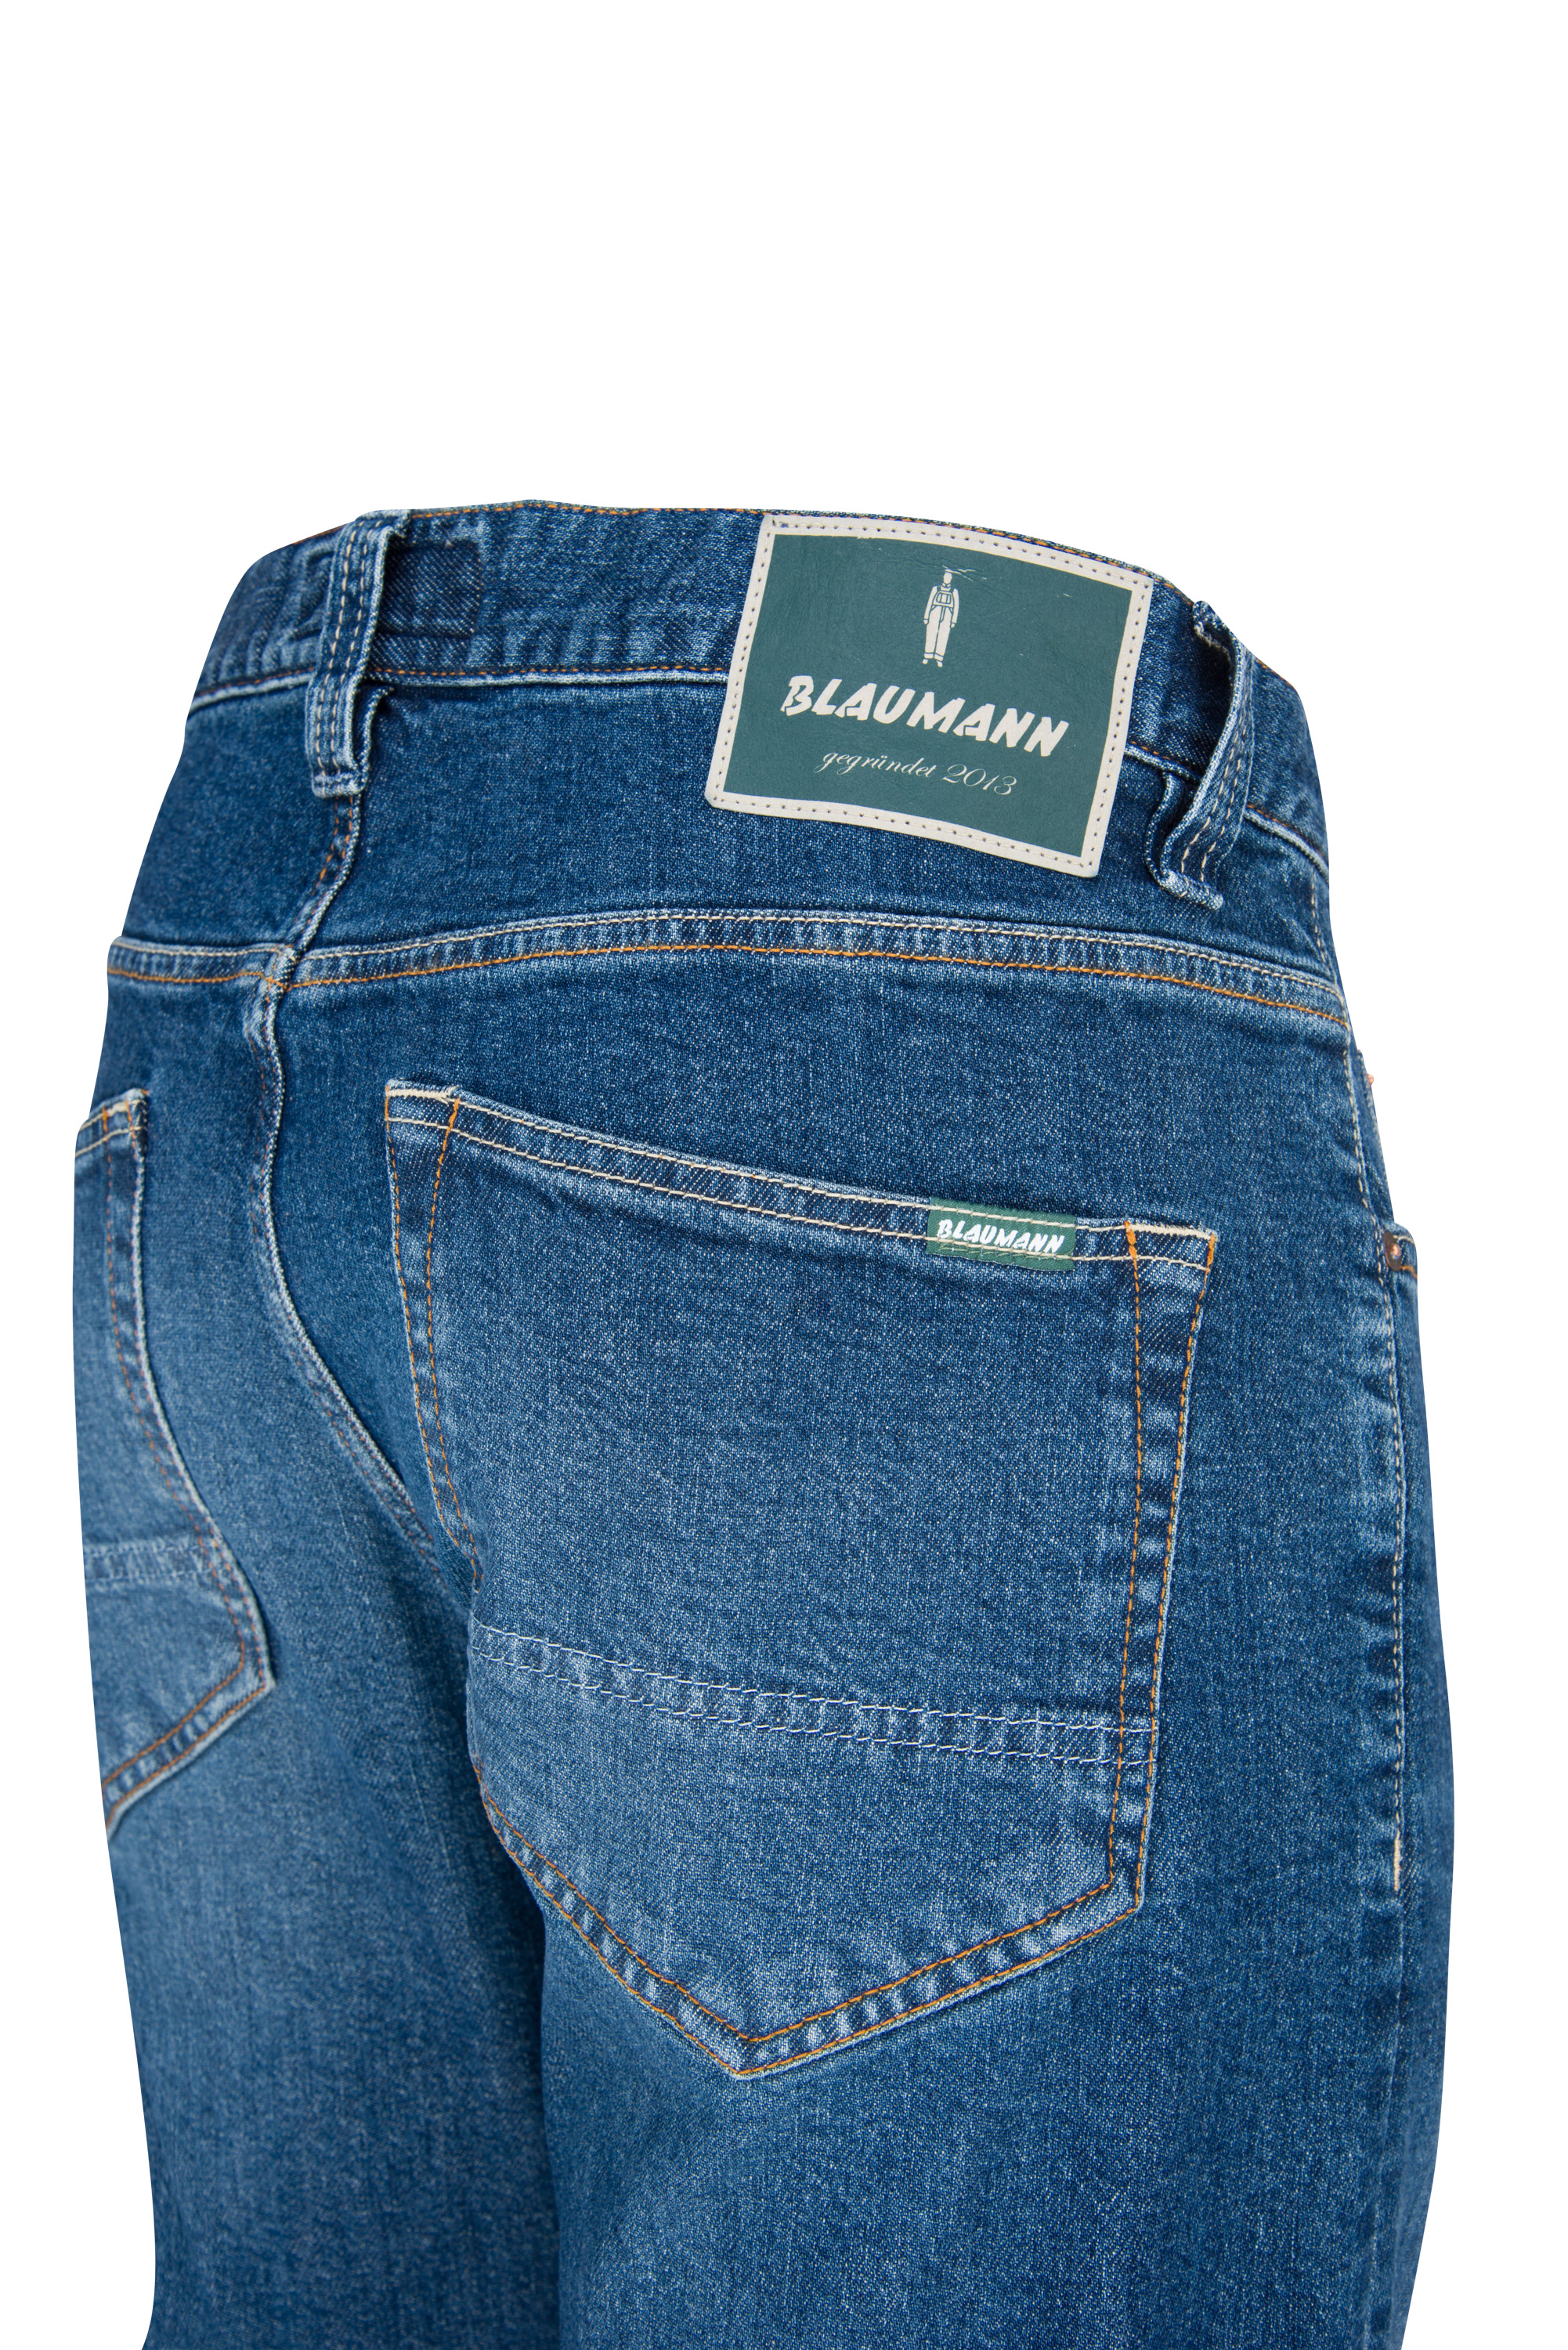 https://www.jeans-manufaktur.de/media/image/f6/19/b5/blaumann-jeans-schmal-stone-heavy-used-1003-200-643-candiani-bm1003-200-643EjjhGAywePjL3.jpg